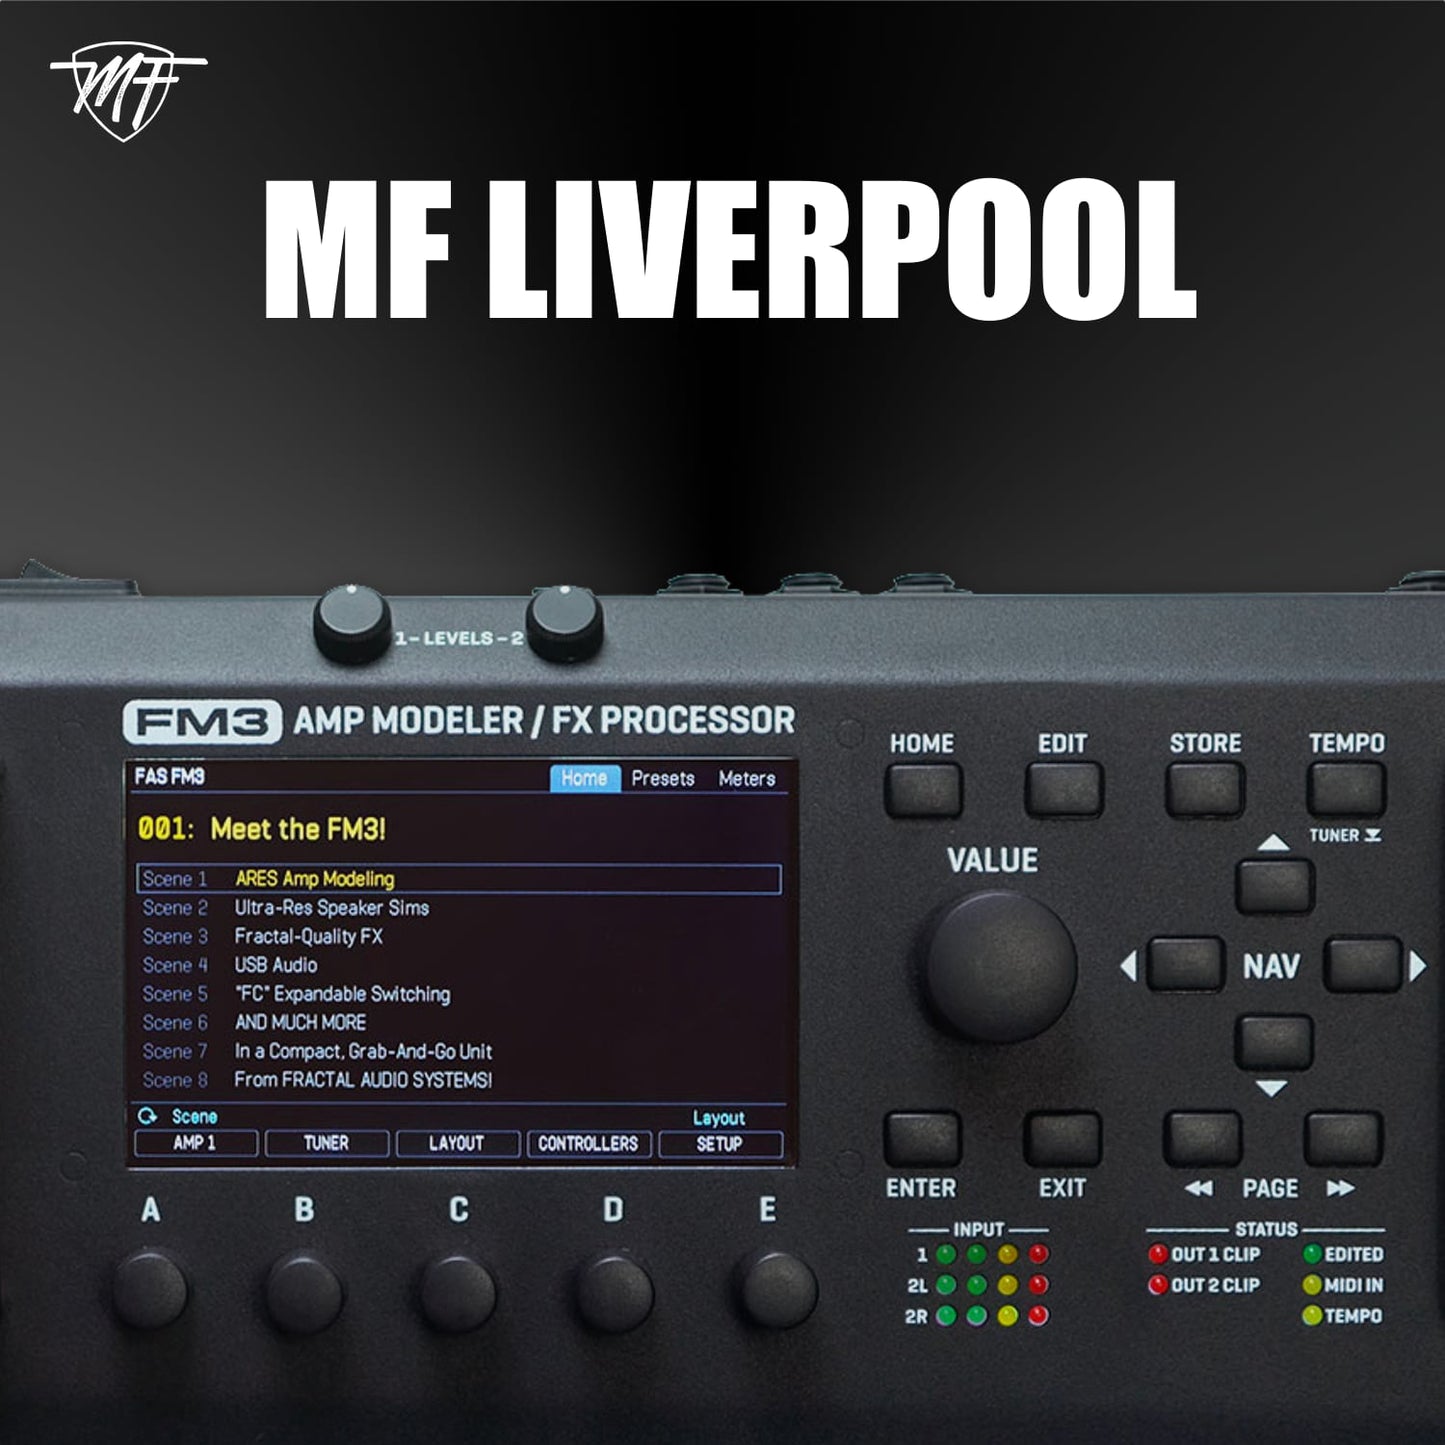 MF LIVERPOOL FM3